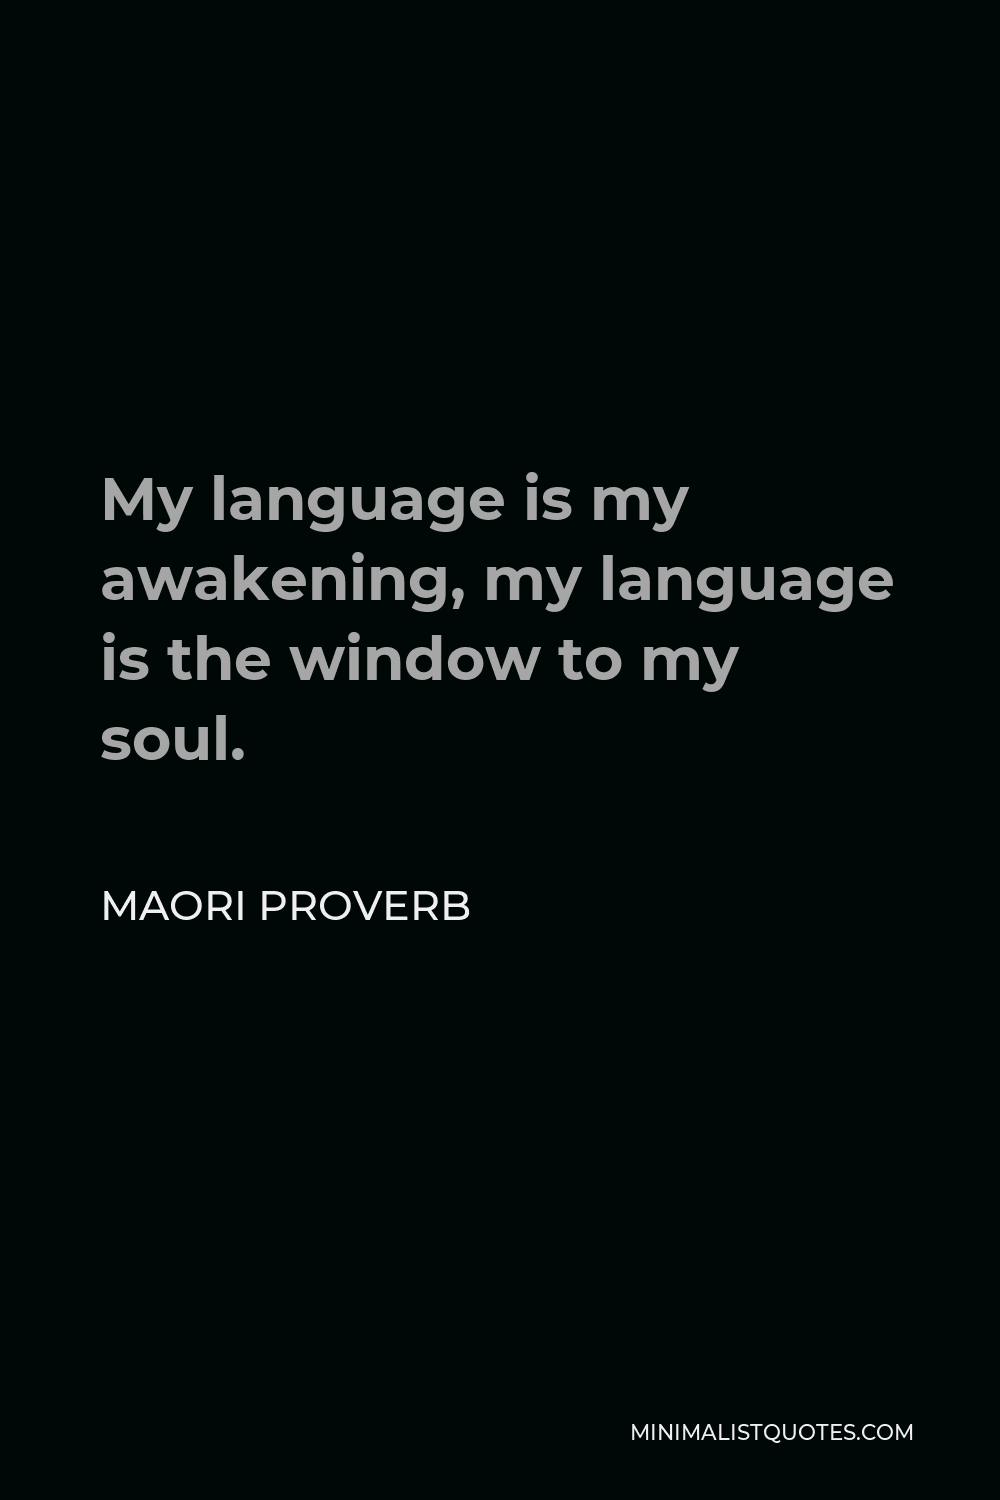 Maori Proverb Quote - My language is my awakening, my language is the window to my soul.